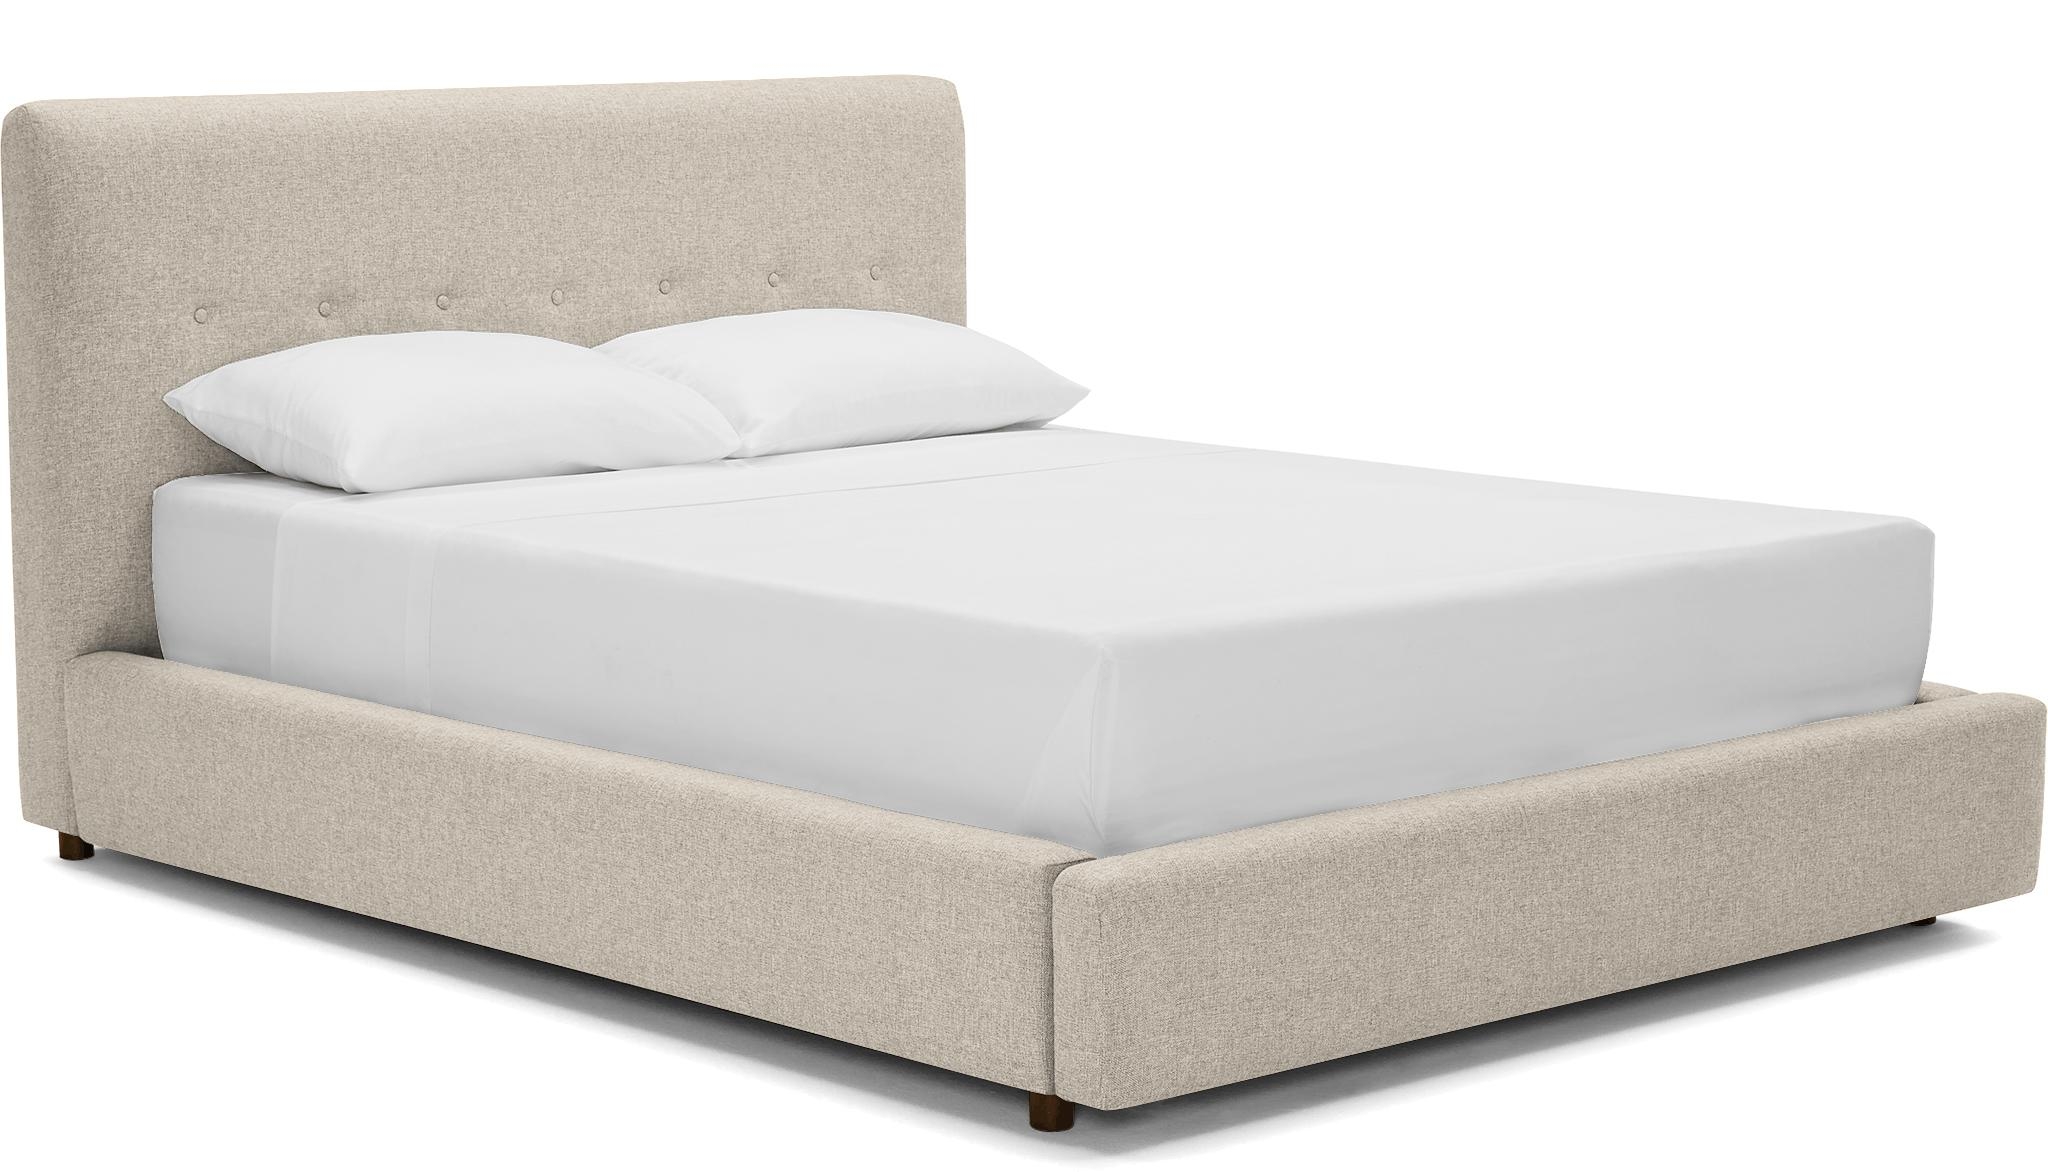 Beige/White Alvin Mid Century Modern Storage Bed - Cody Sandstone - Mocha - Eastern King - Image 1